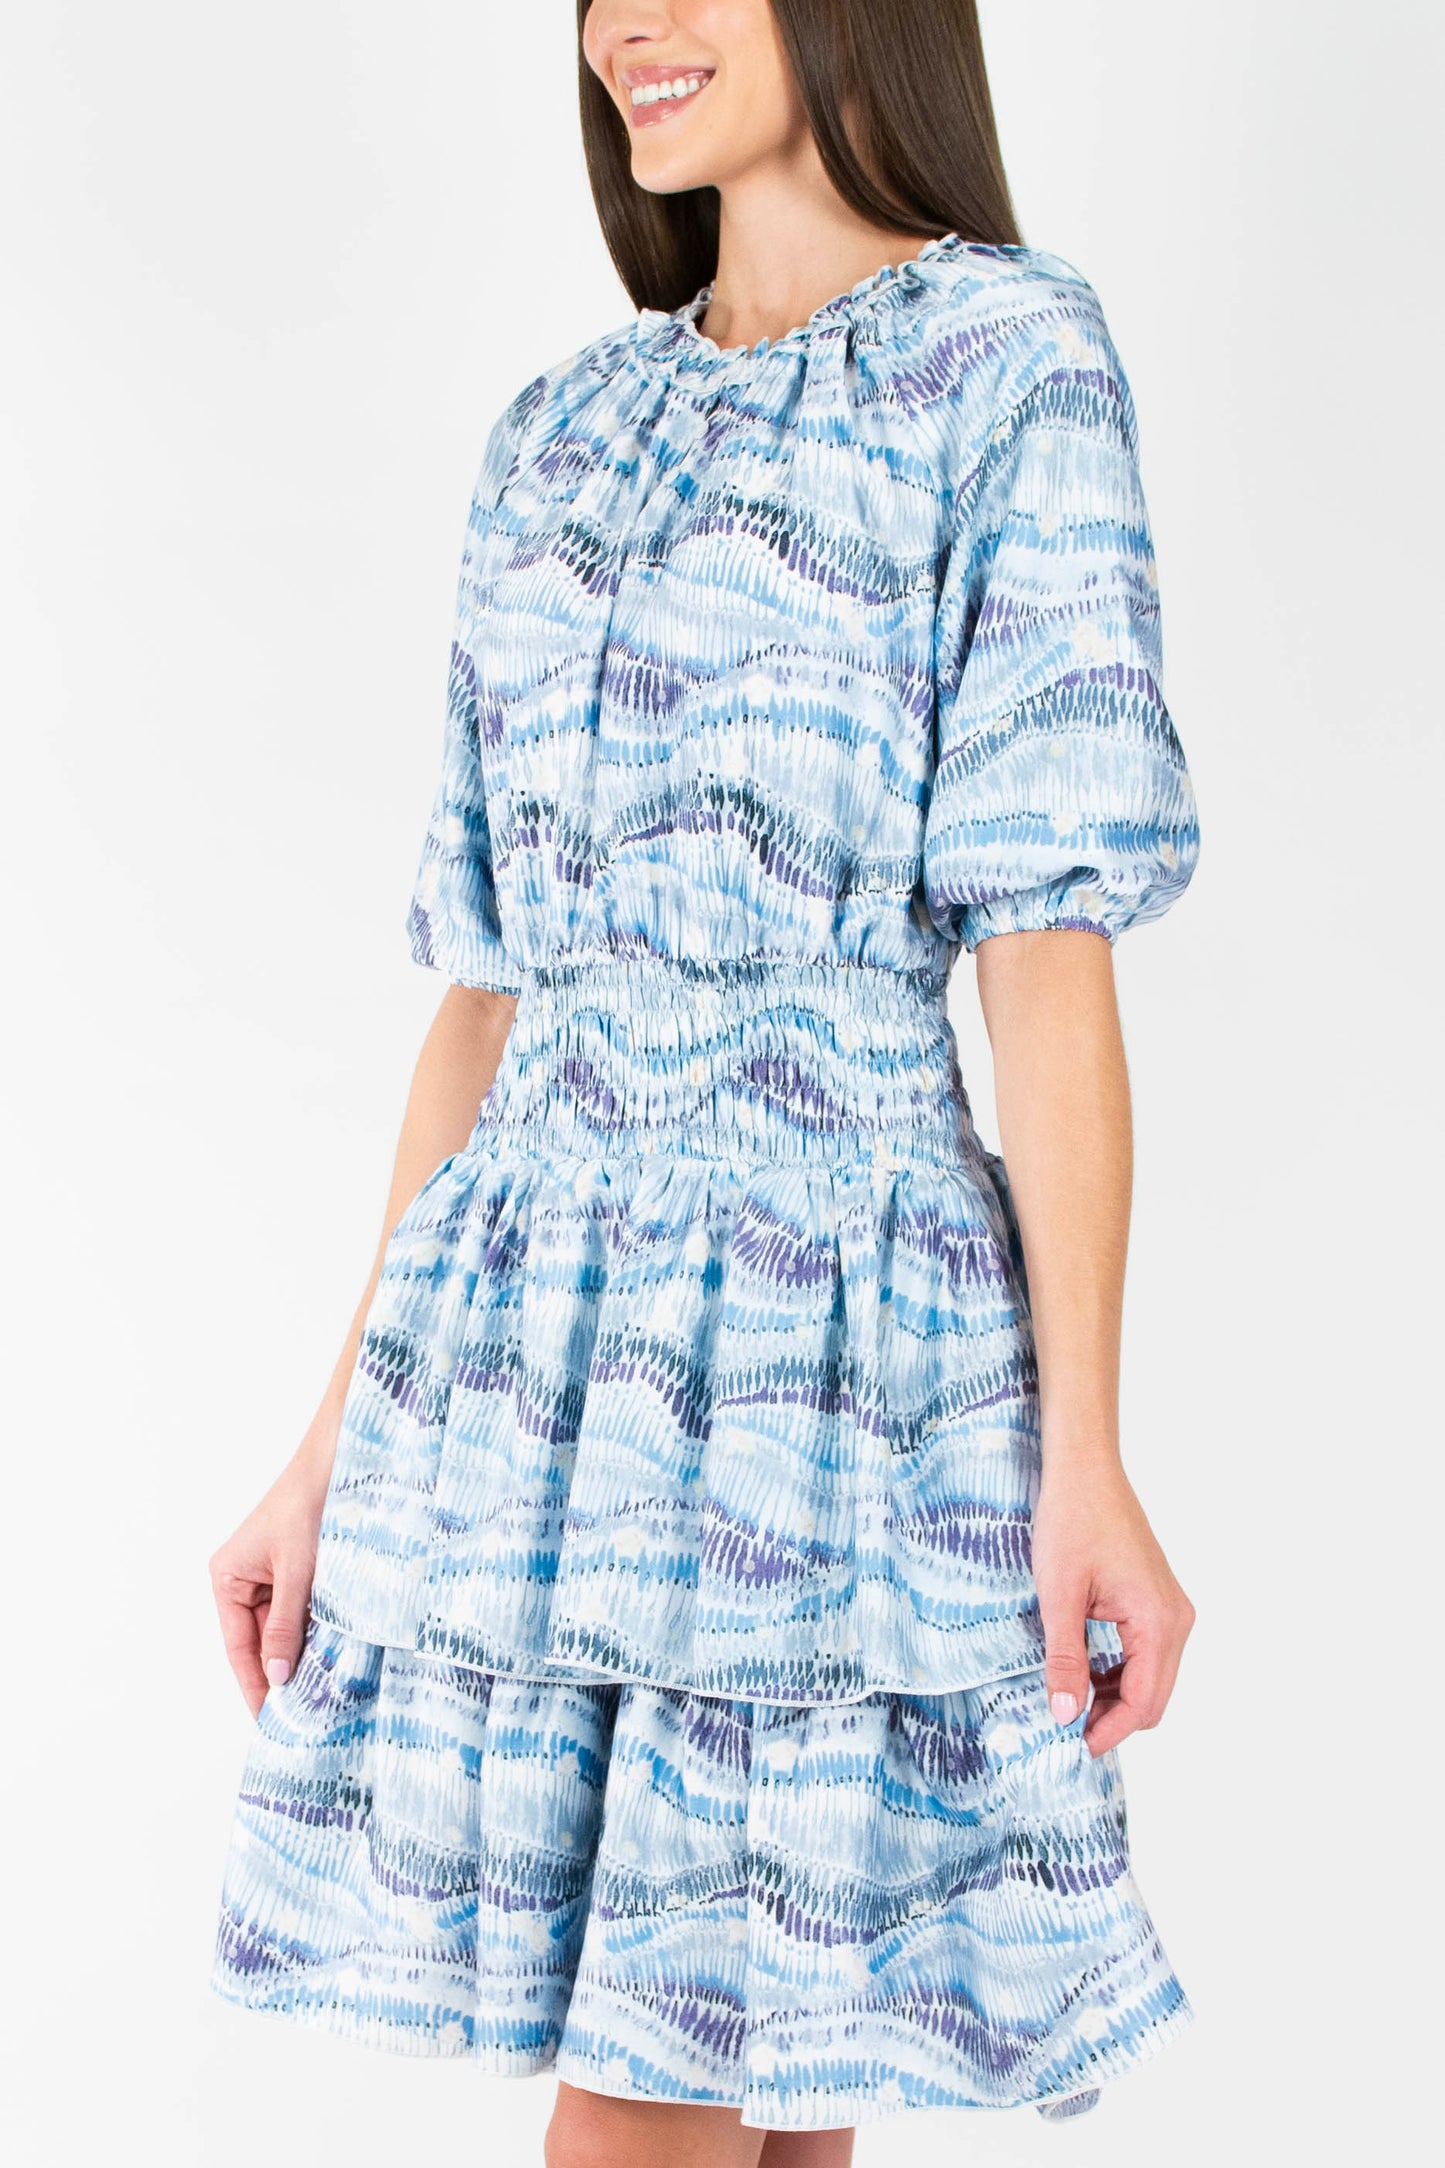 ZENA DRESS Short Sleeve (BLUE PATTERN) 39"